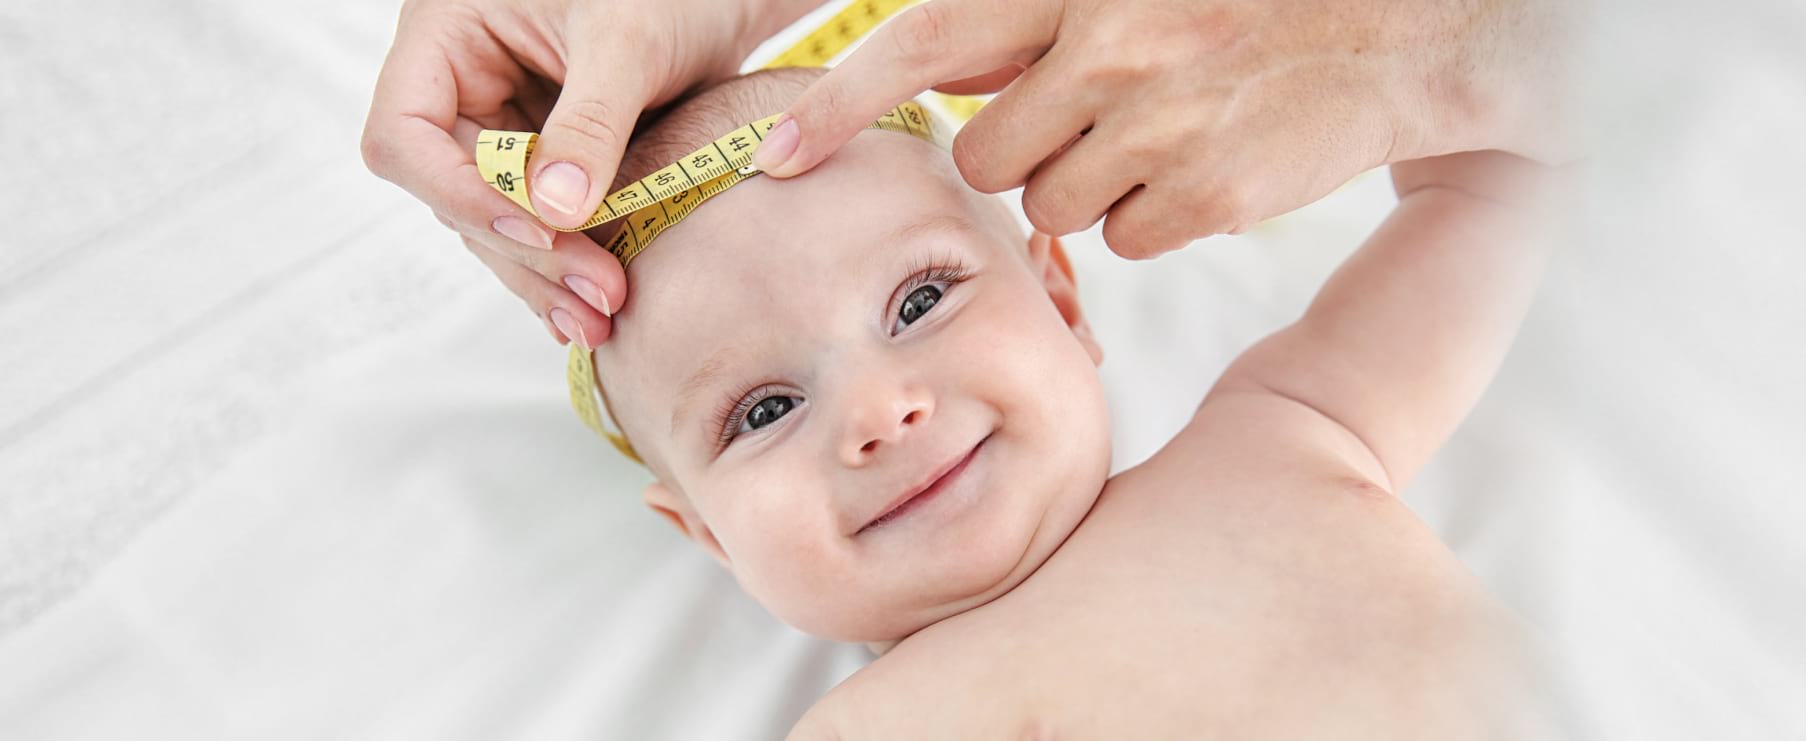 measuring an infants head size